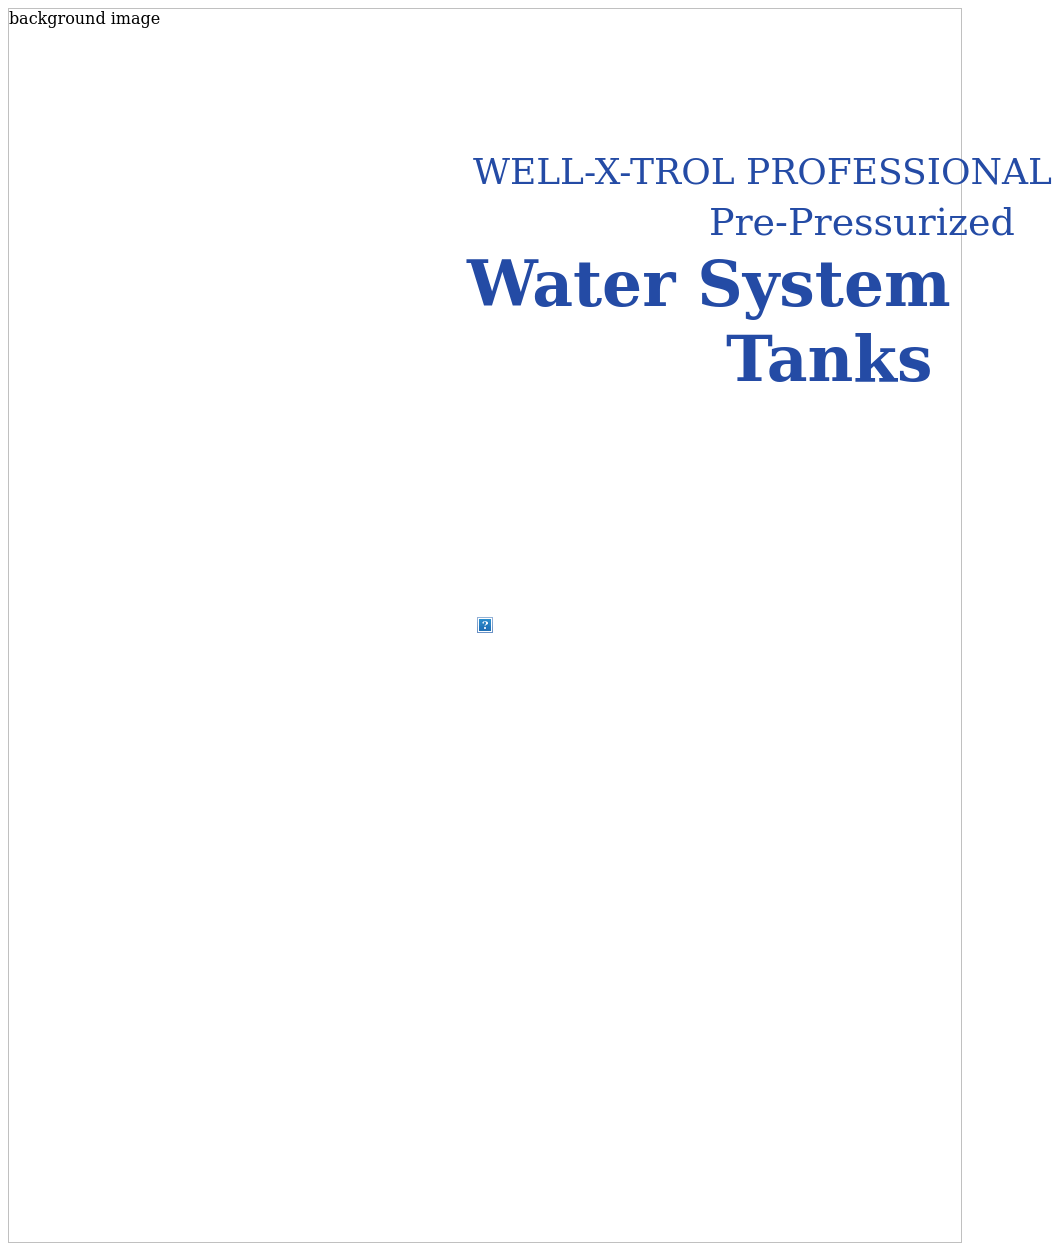 Pre-Pressurized Water System Tanks WELL-X-TROL